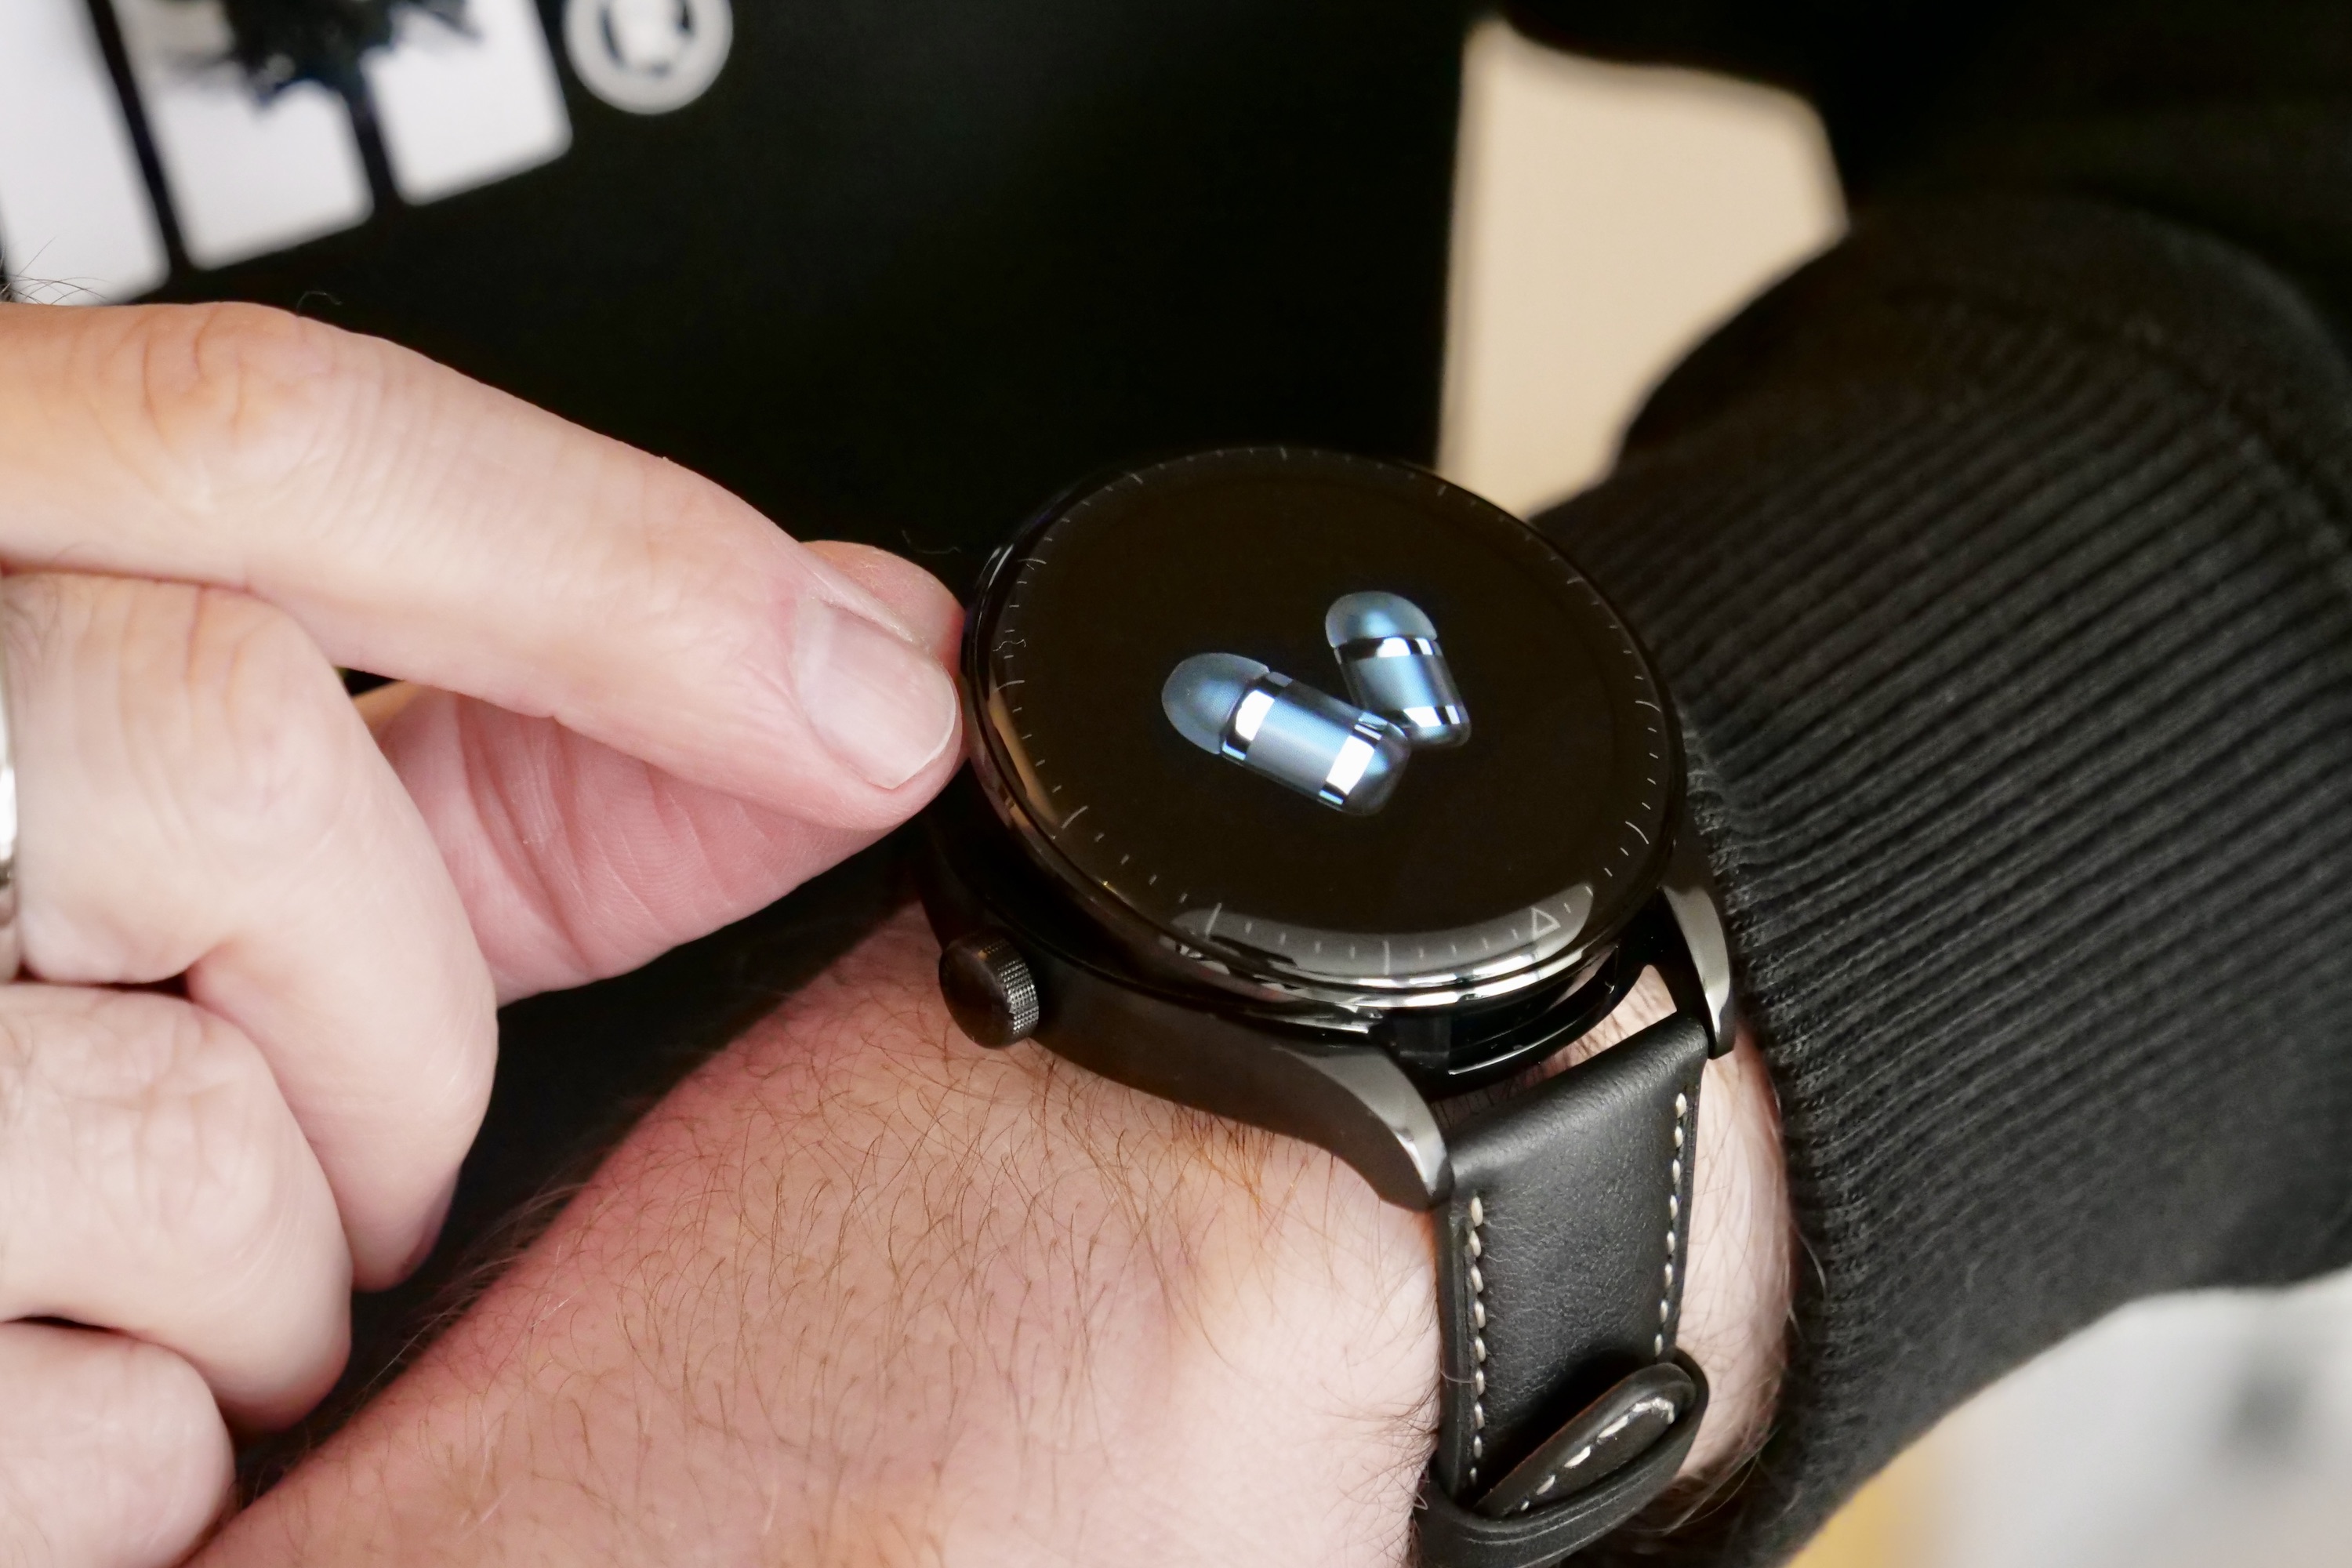 Huawei's latest smartwatch has hidden earbuds inside - The Verge